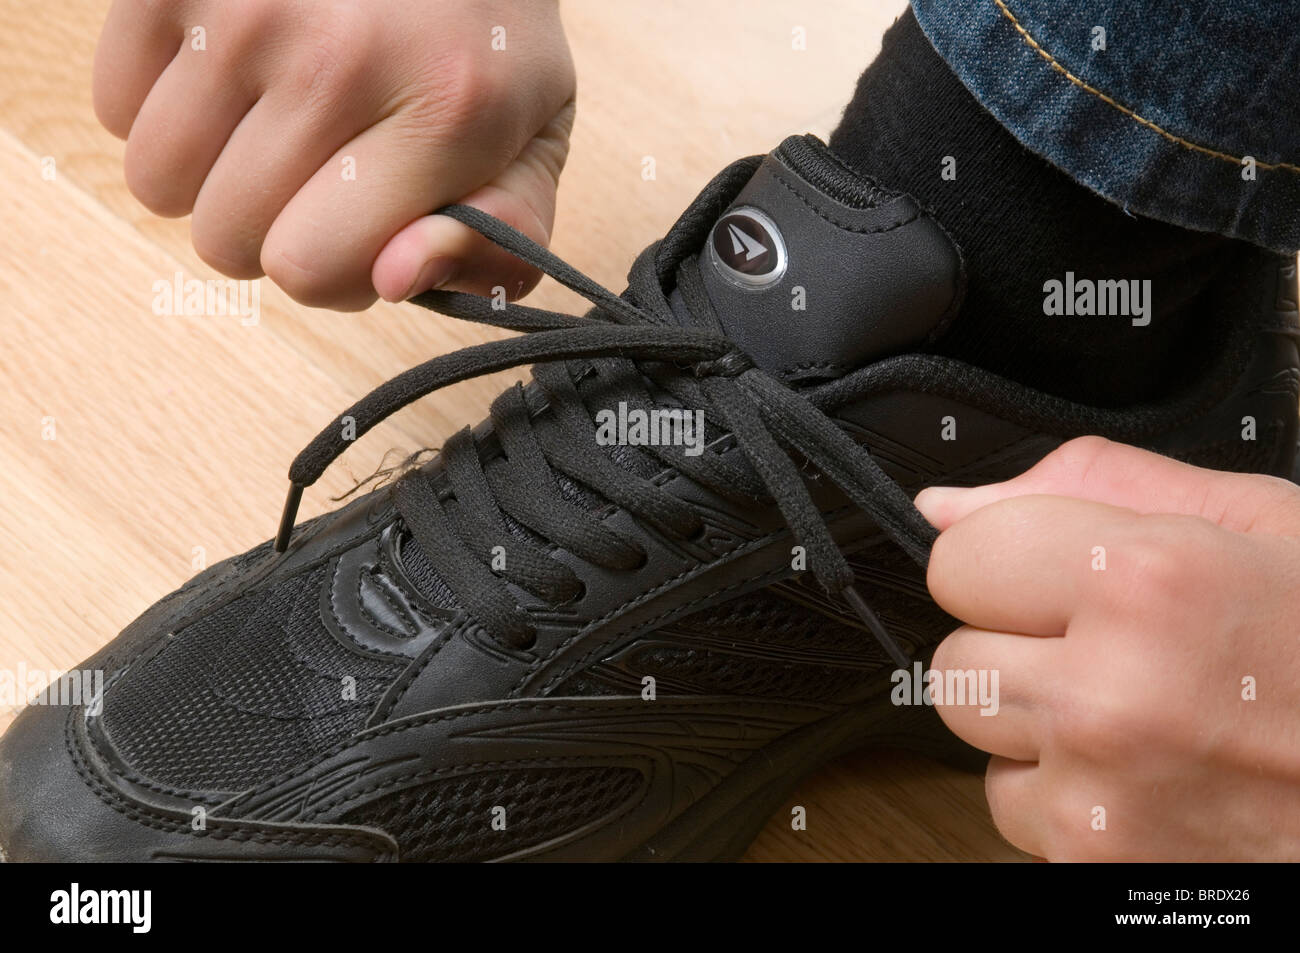 How to Tie Leather Shoe Laces  Leather shoe laces, Shoe laces